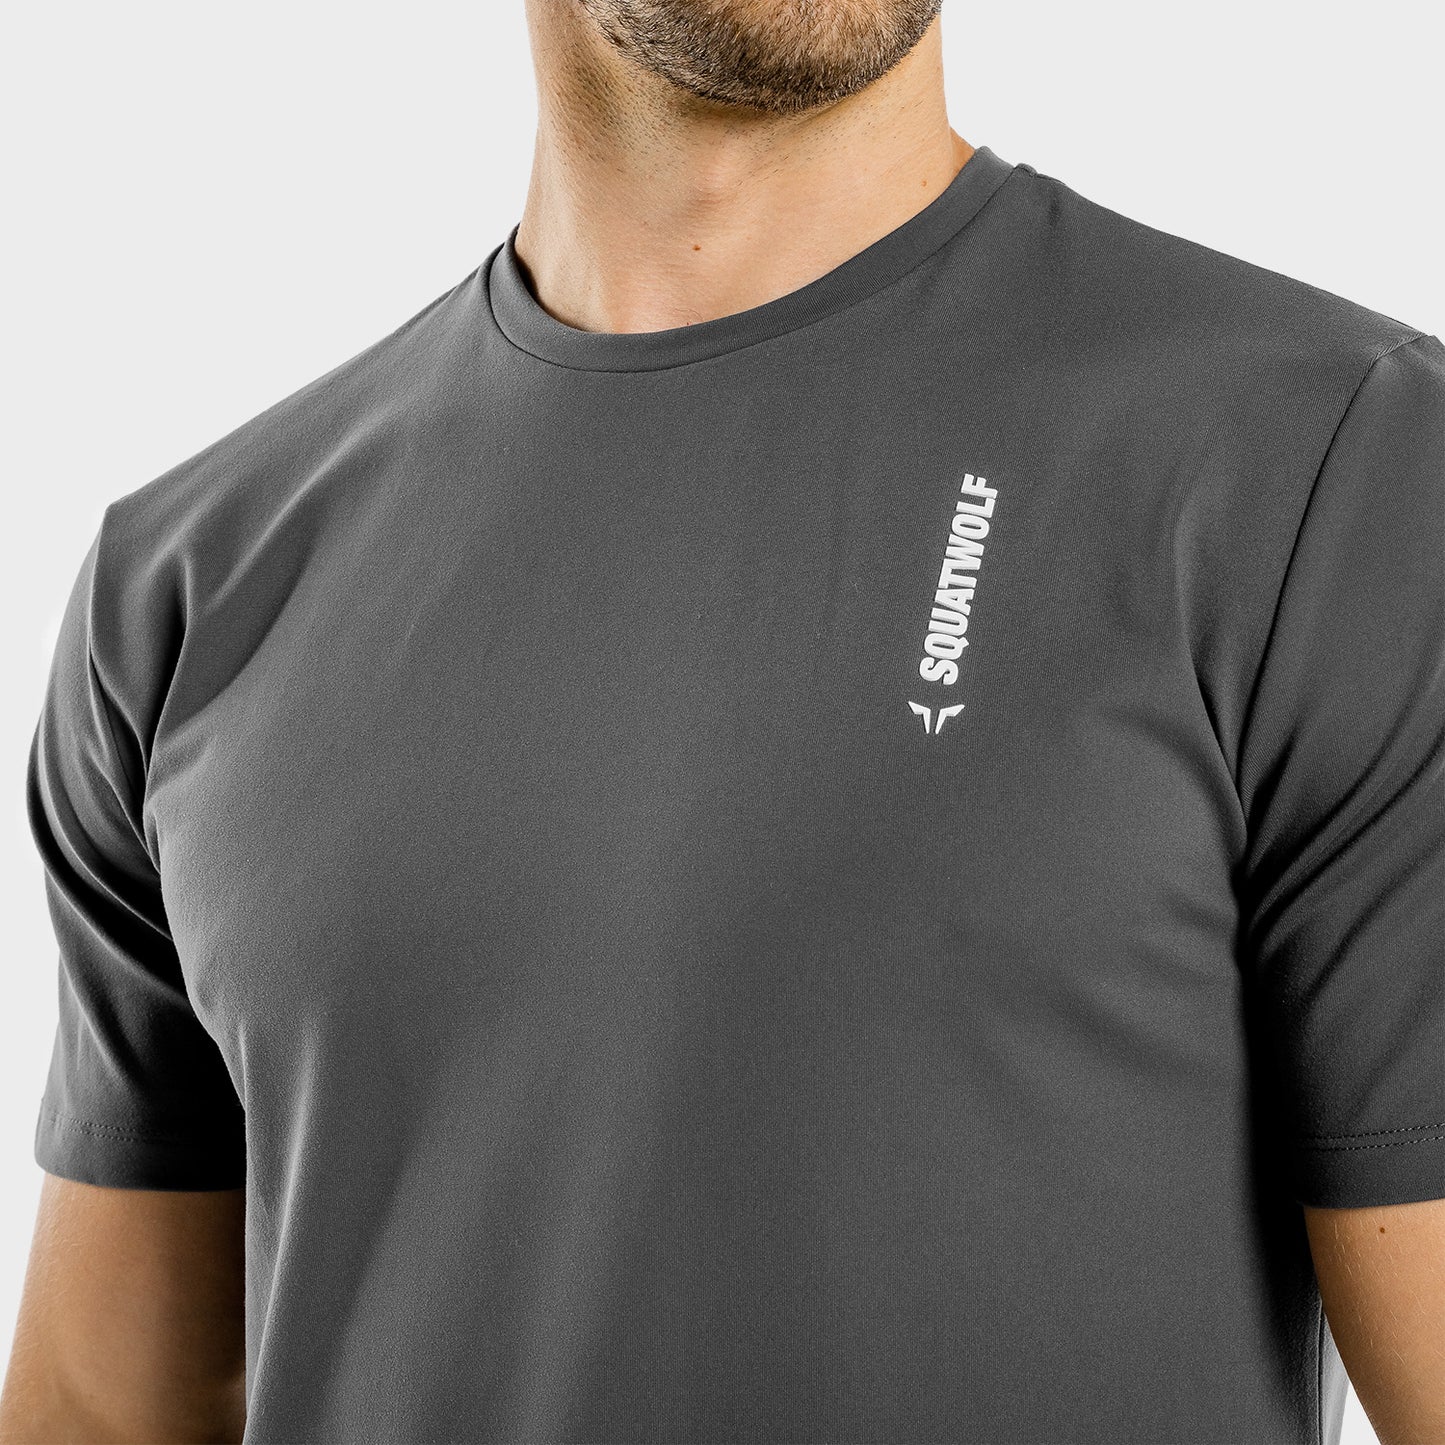 squatwolf-workout-shirts-for-men-warrior-gym-tee-grey-gym-wear